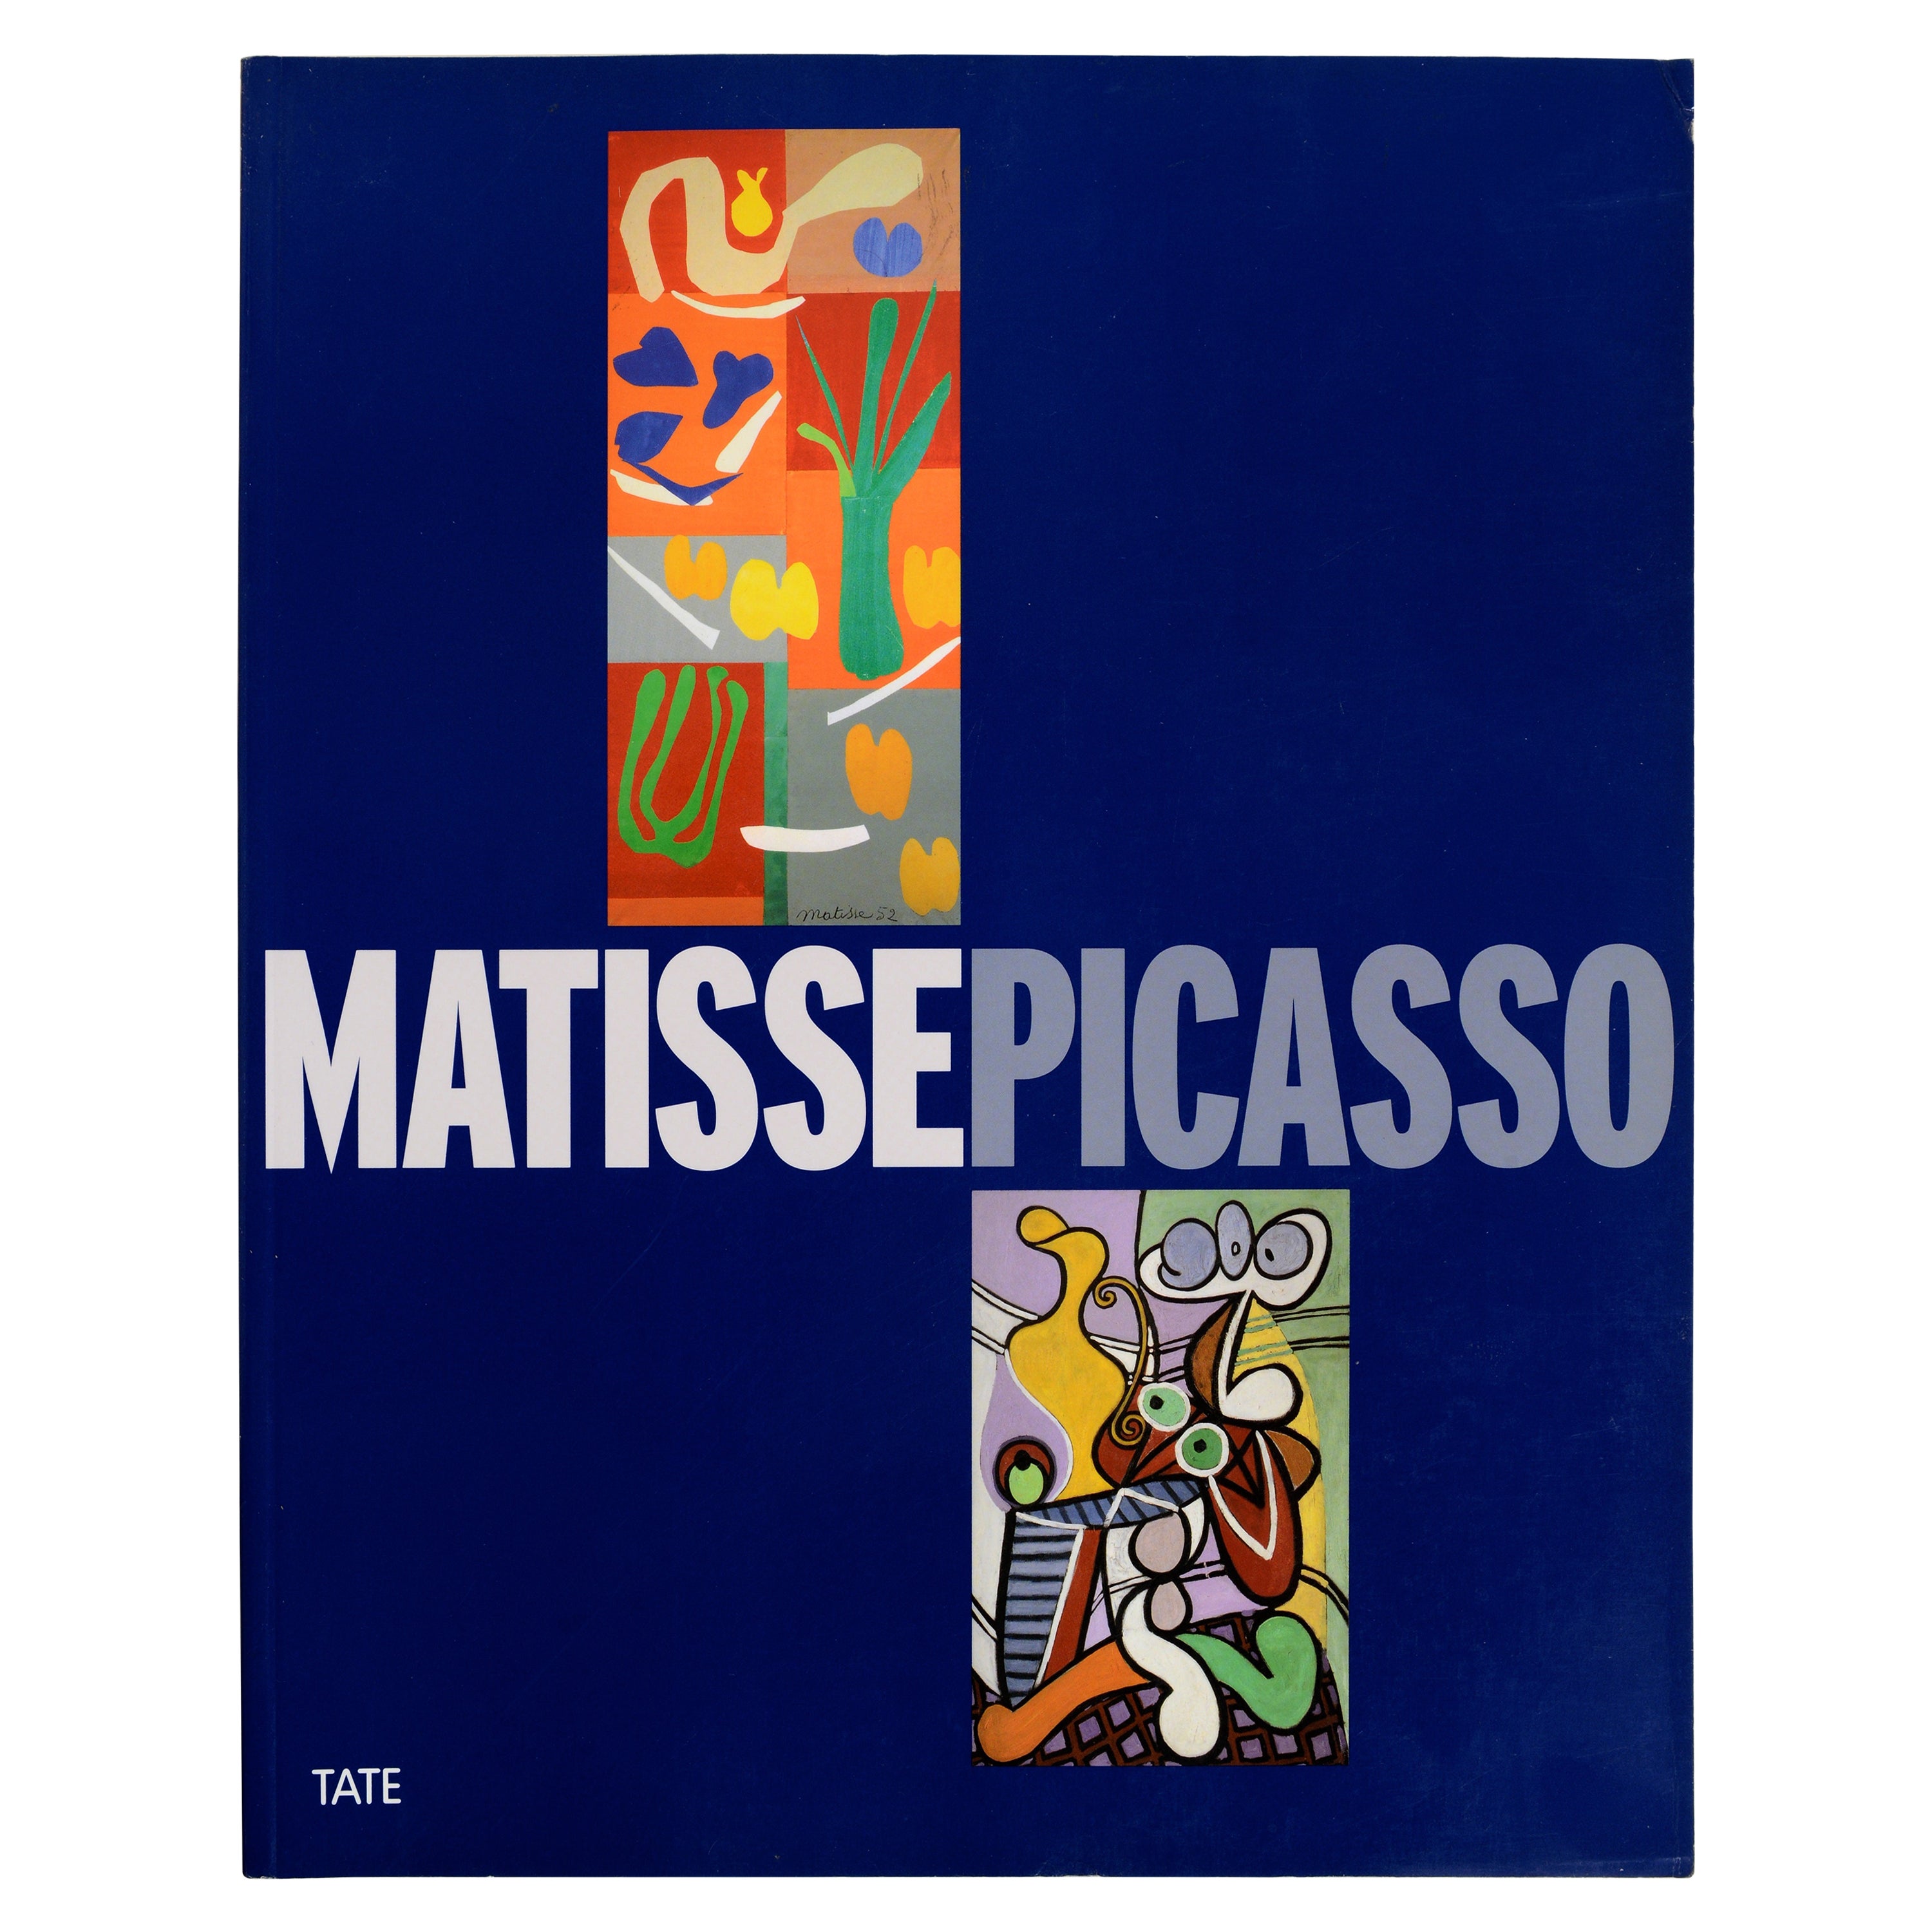 Matisse Picasso, de la succession d'Herbert Kasper, lettre Merci du MOMA